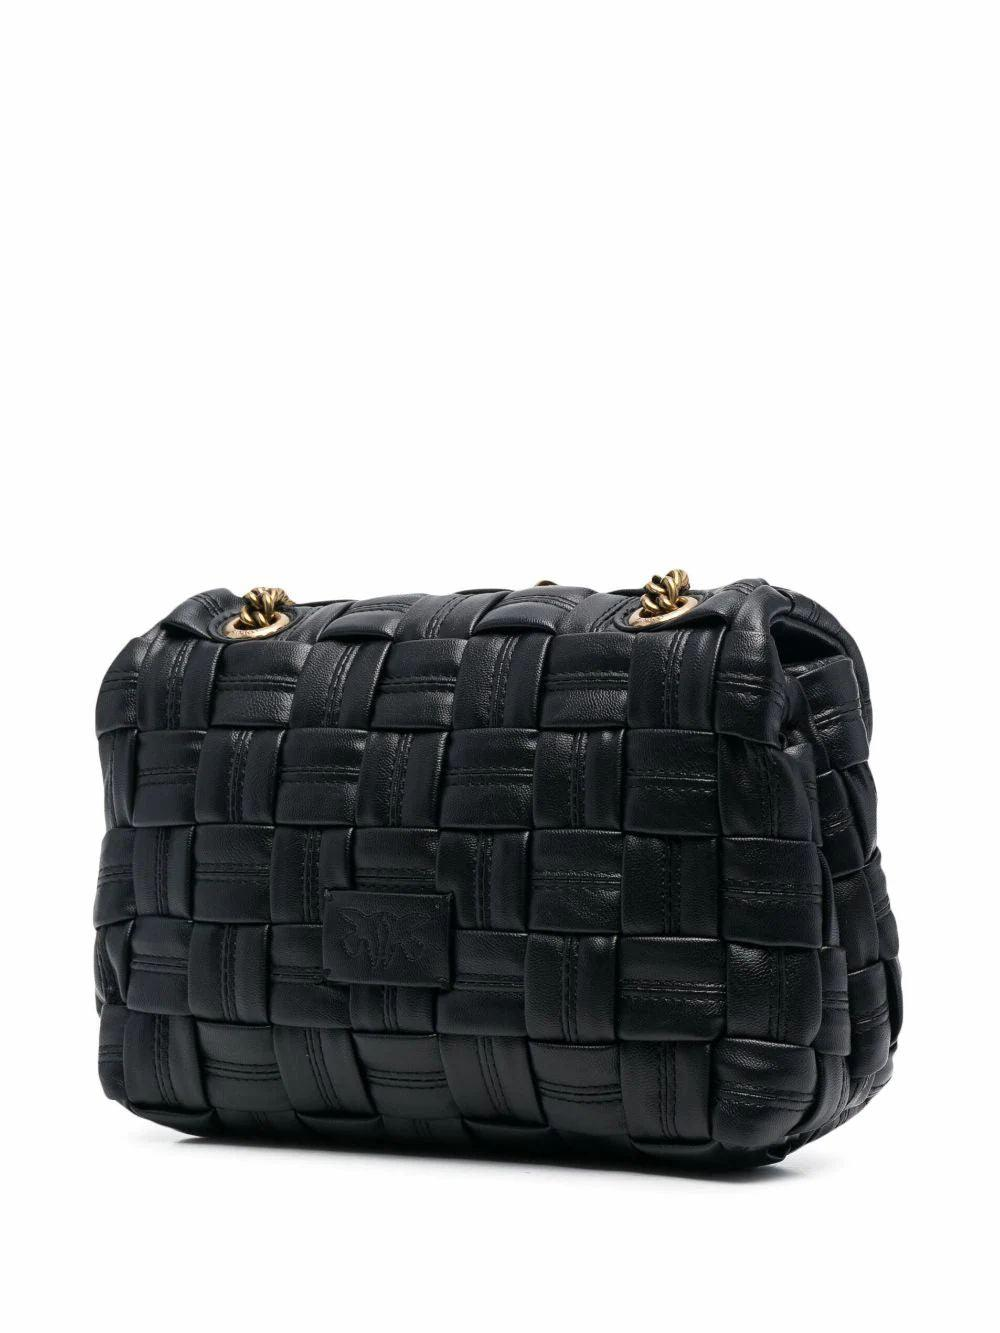 Pinko Love Bag Woven Leather Black